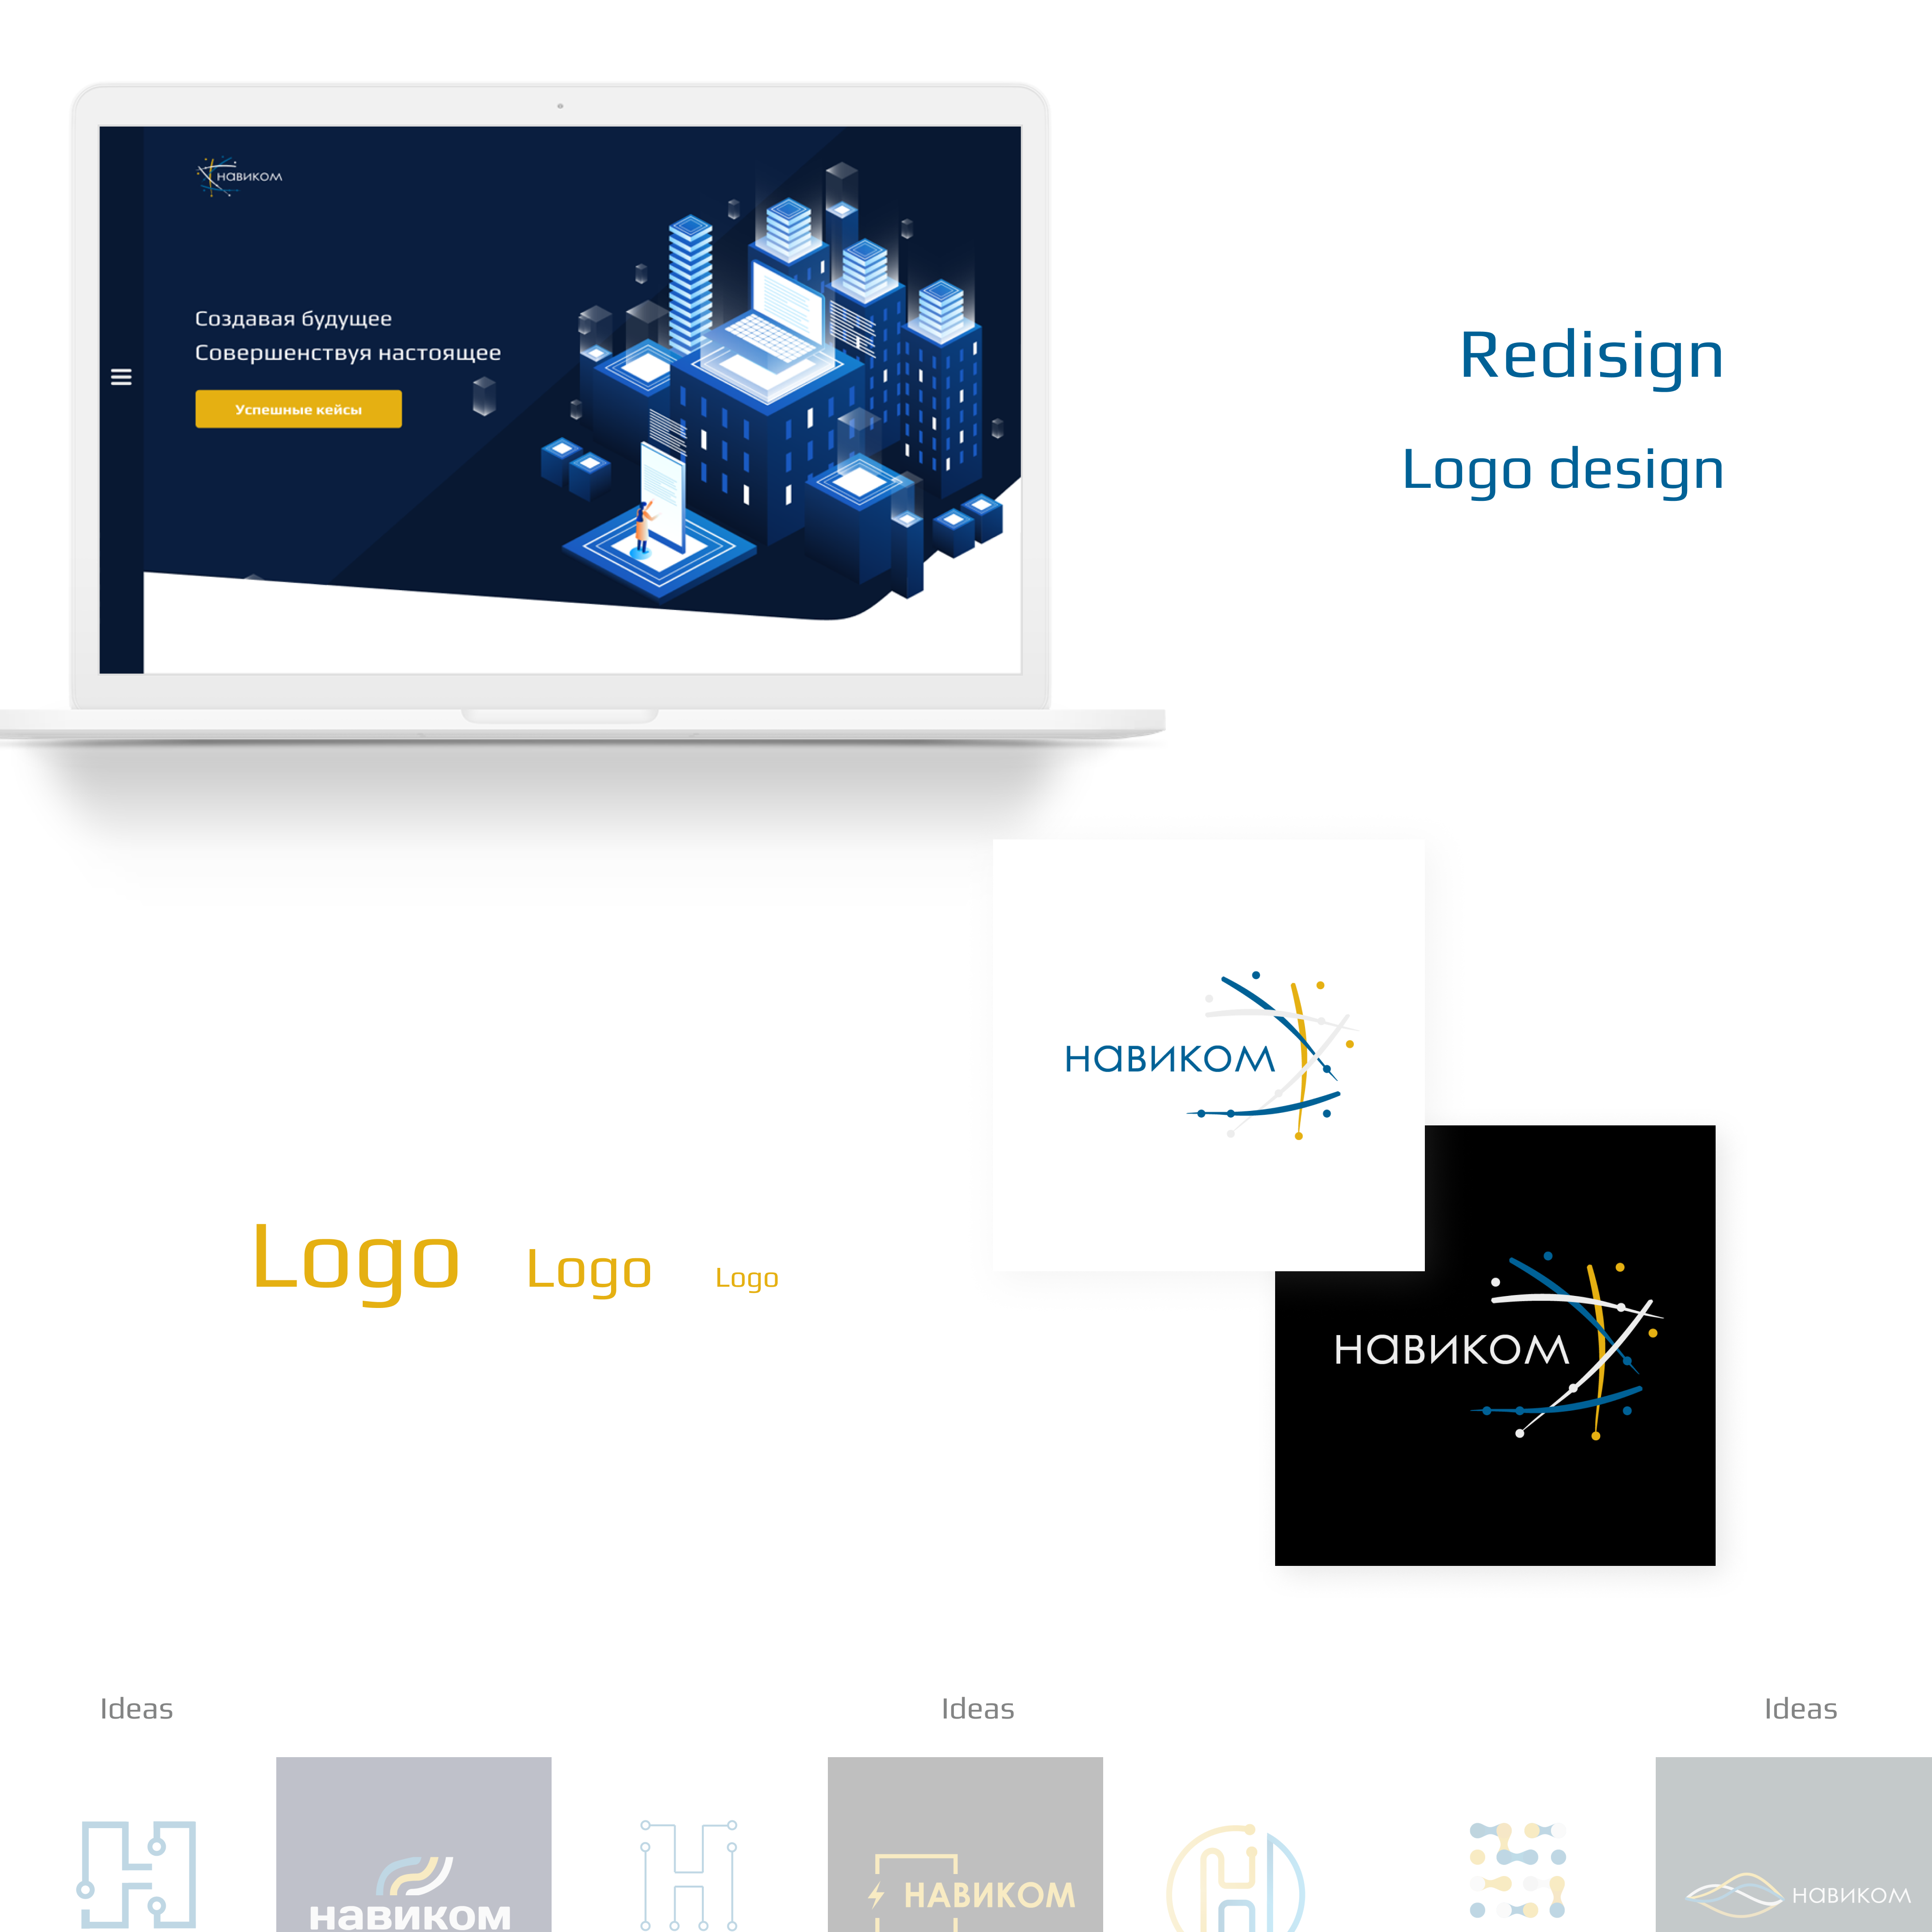 Redesign website and Logo design